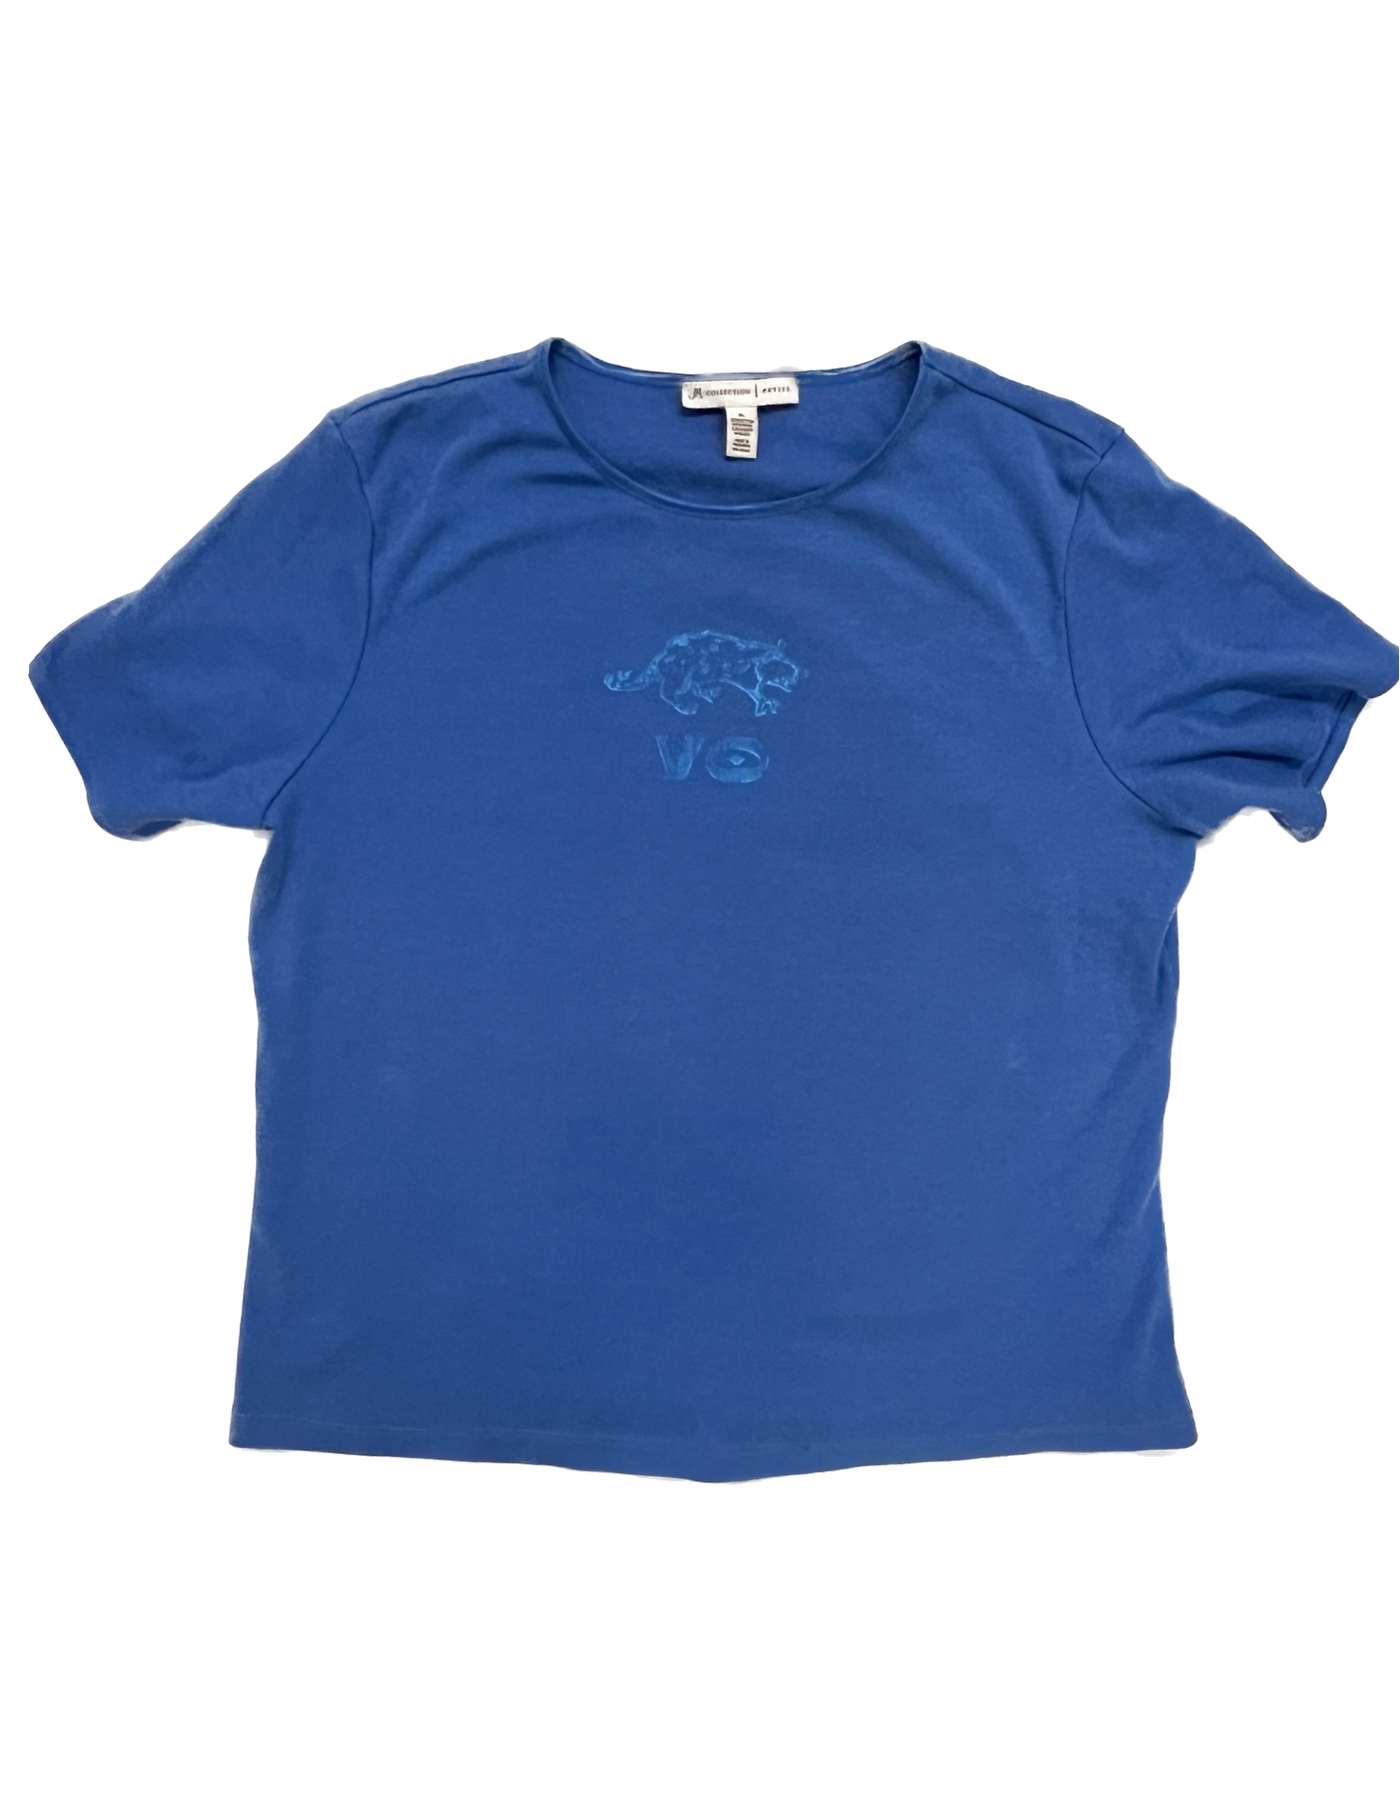 Blue Knit Shirt with Possum